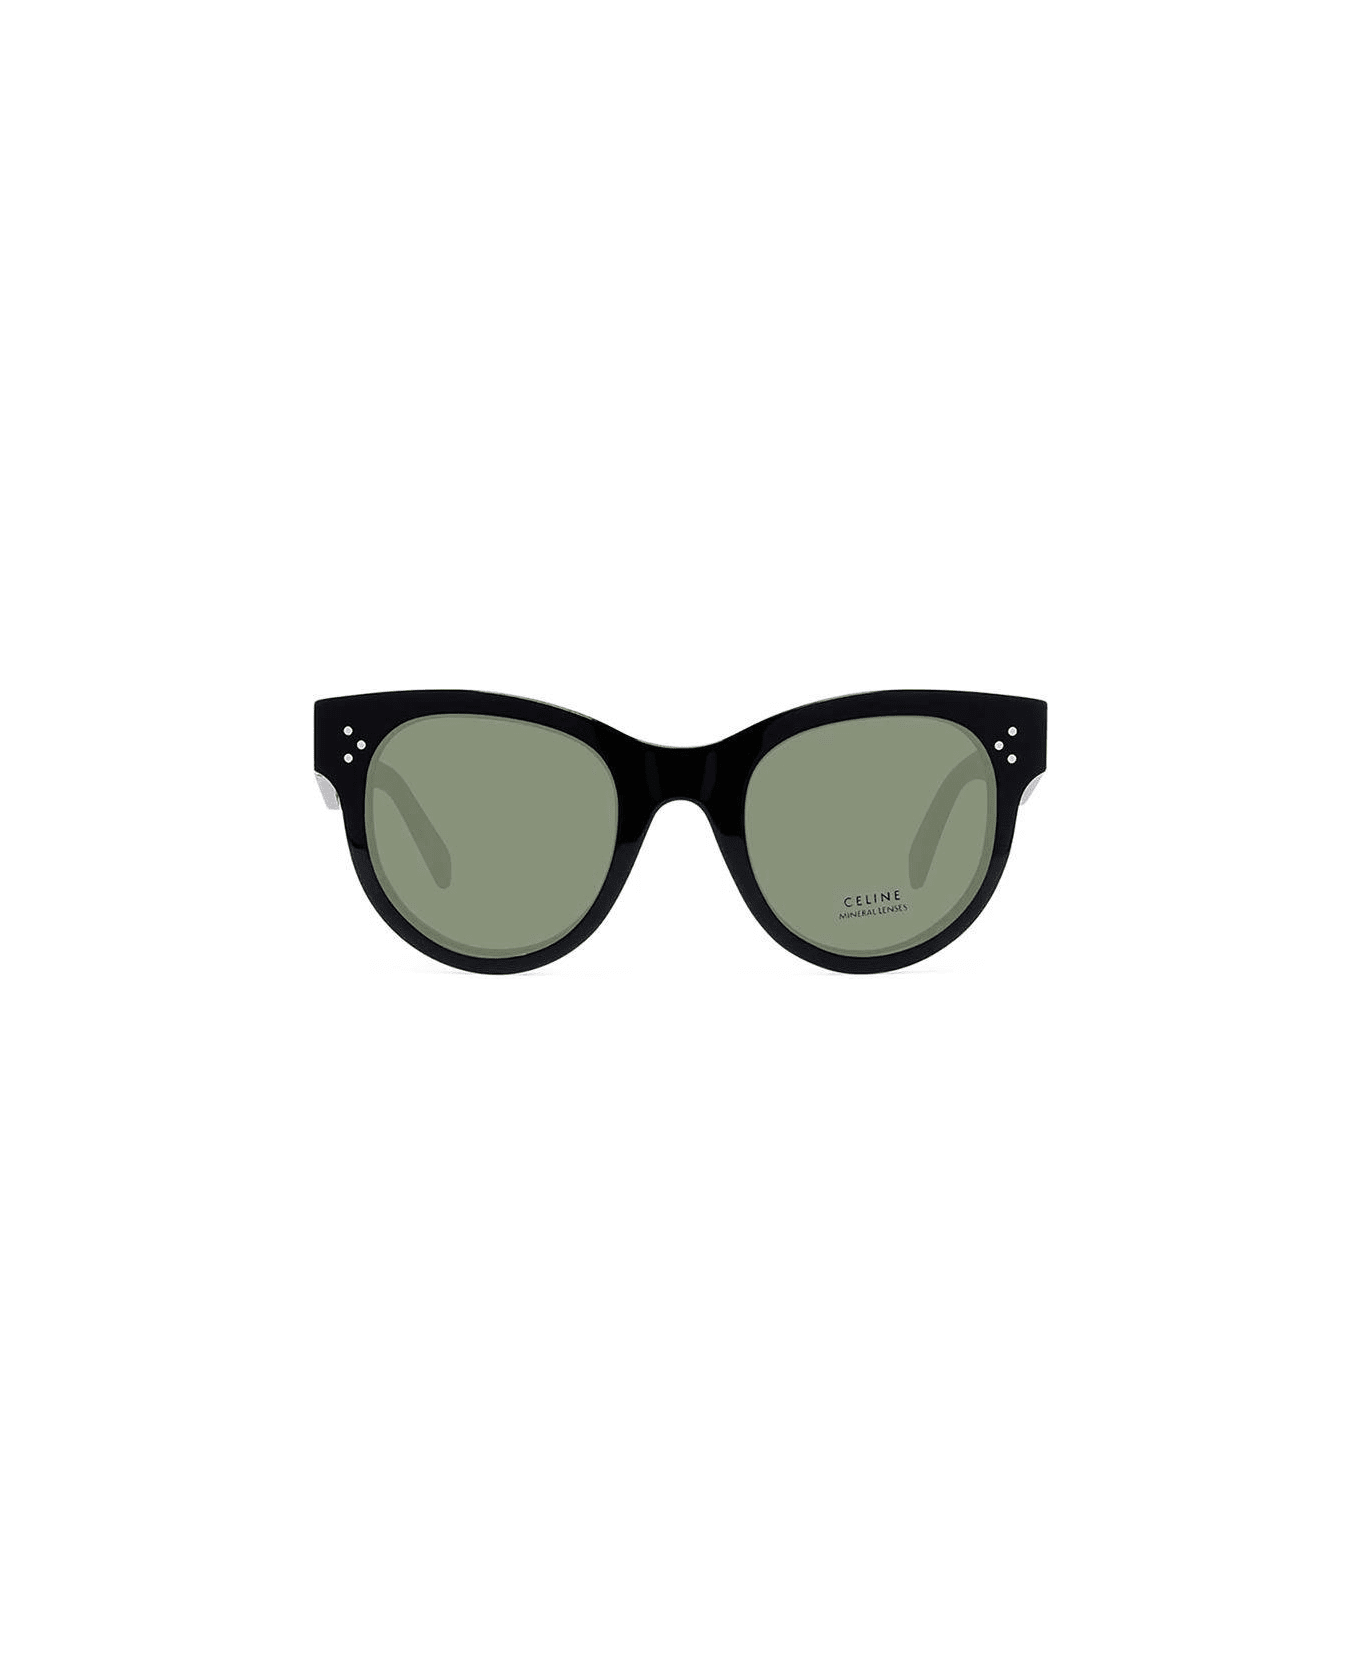 Celine Round Frame Sunglasses - 01a